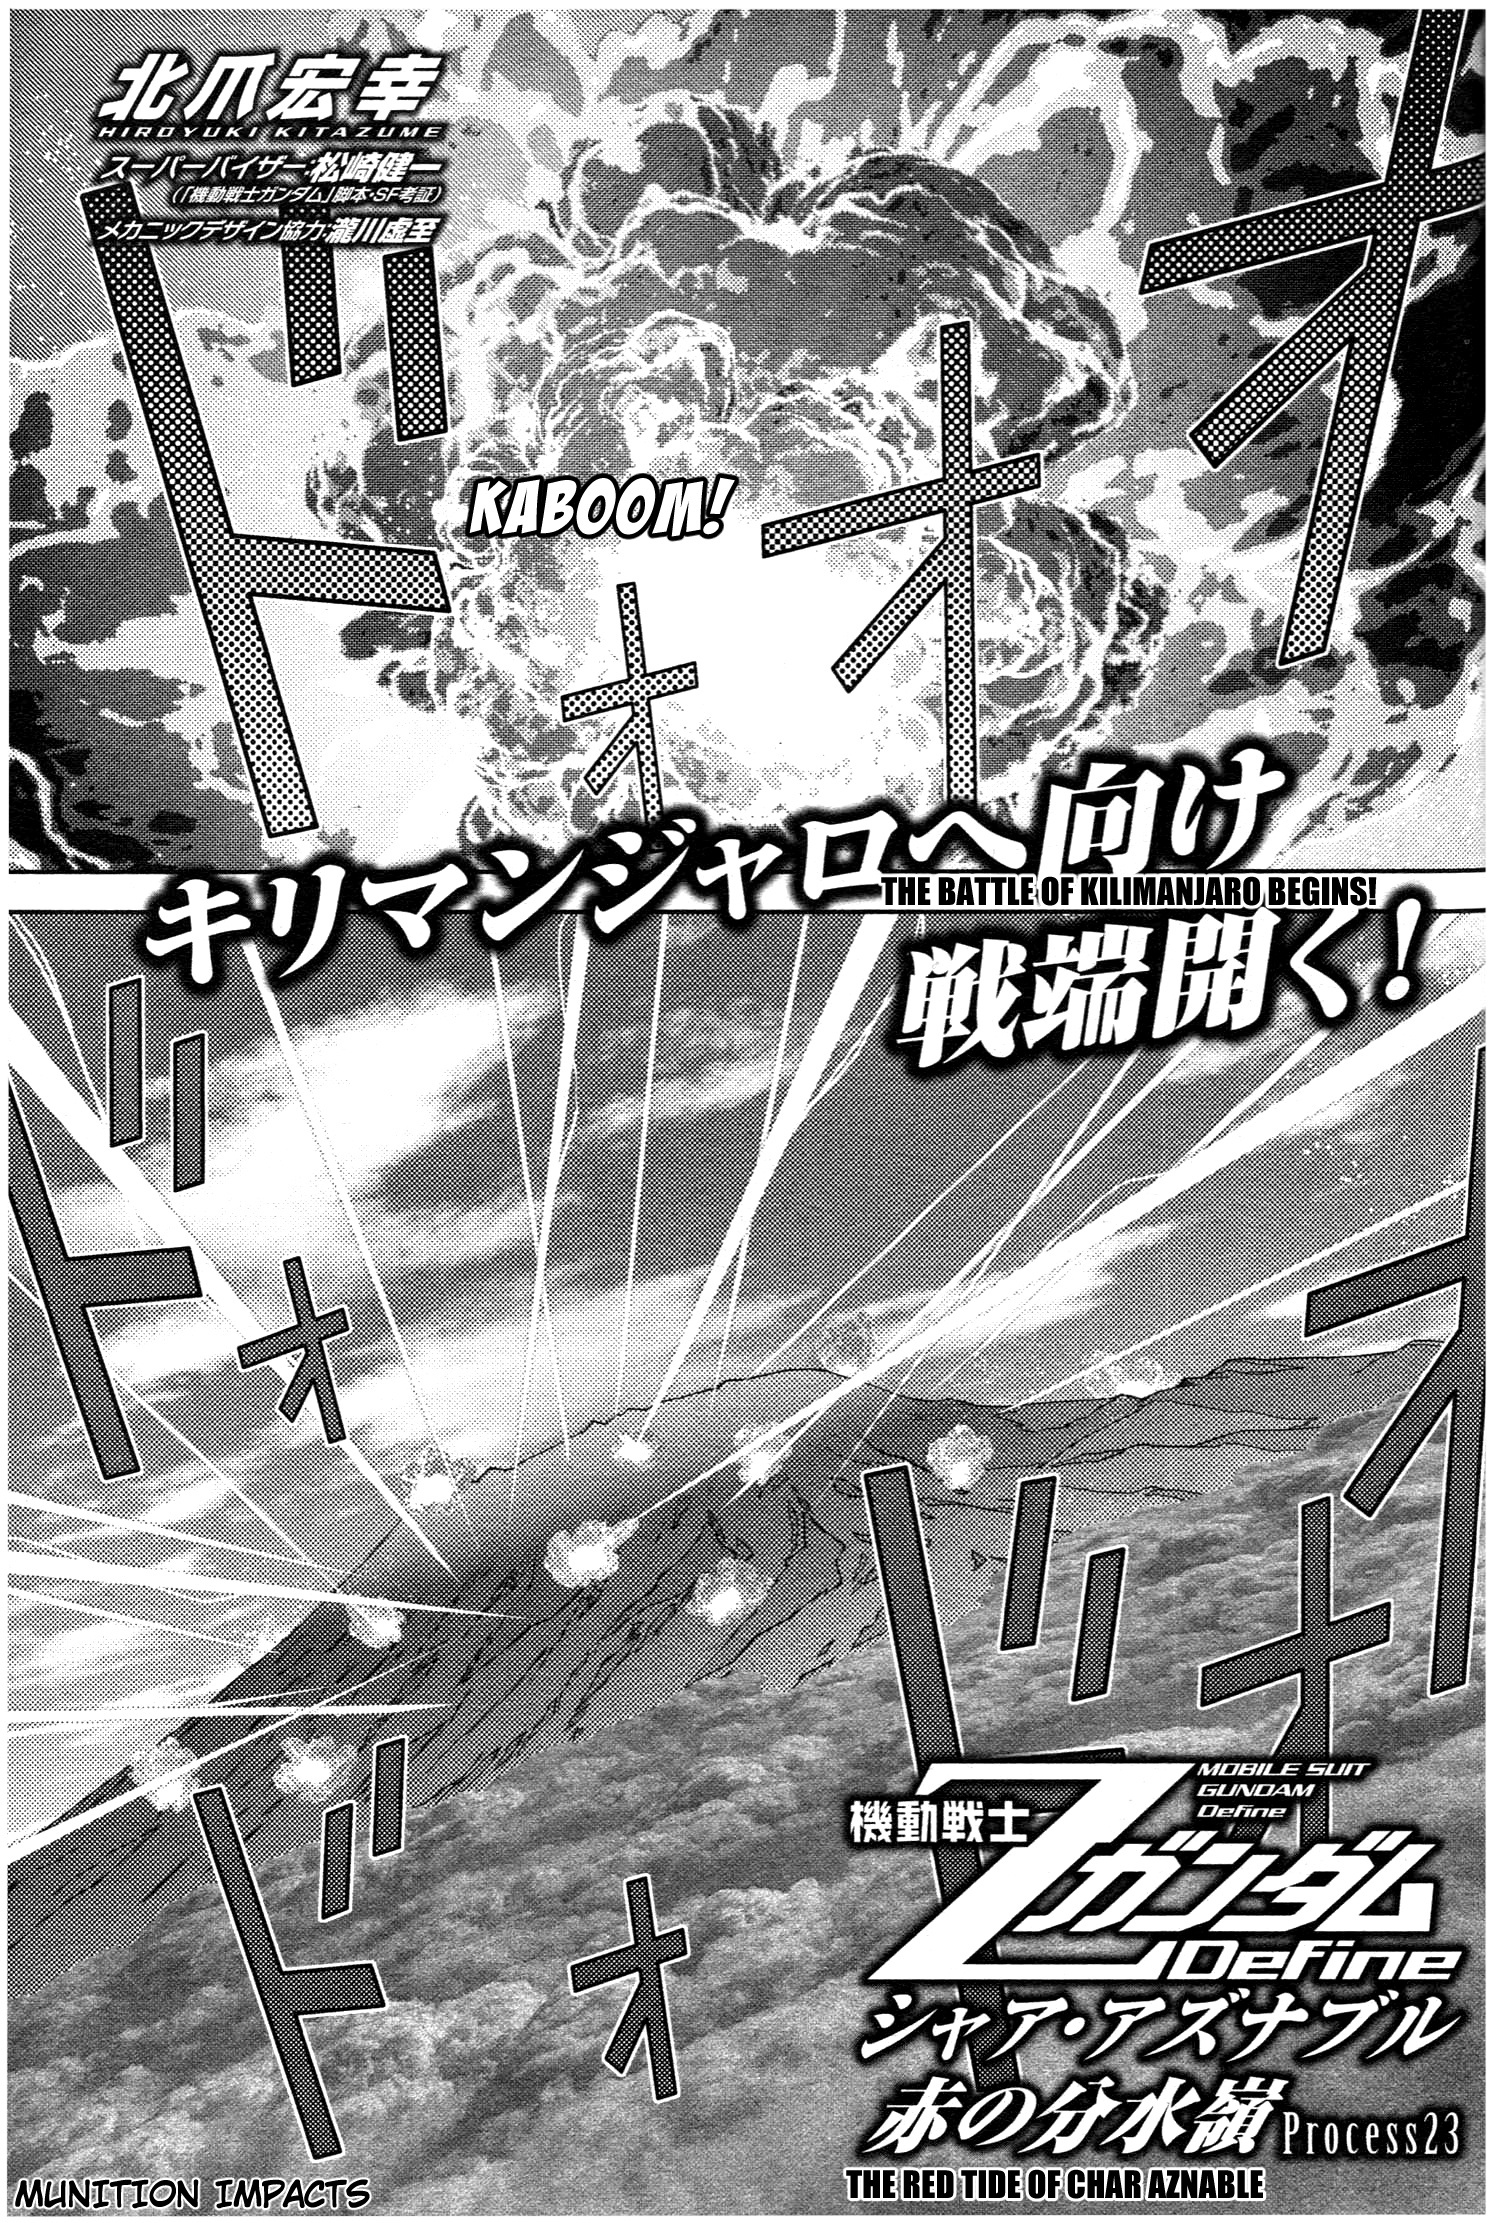 Mobile Suit Zeta Gundam - Define - Page 1